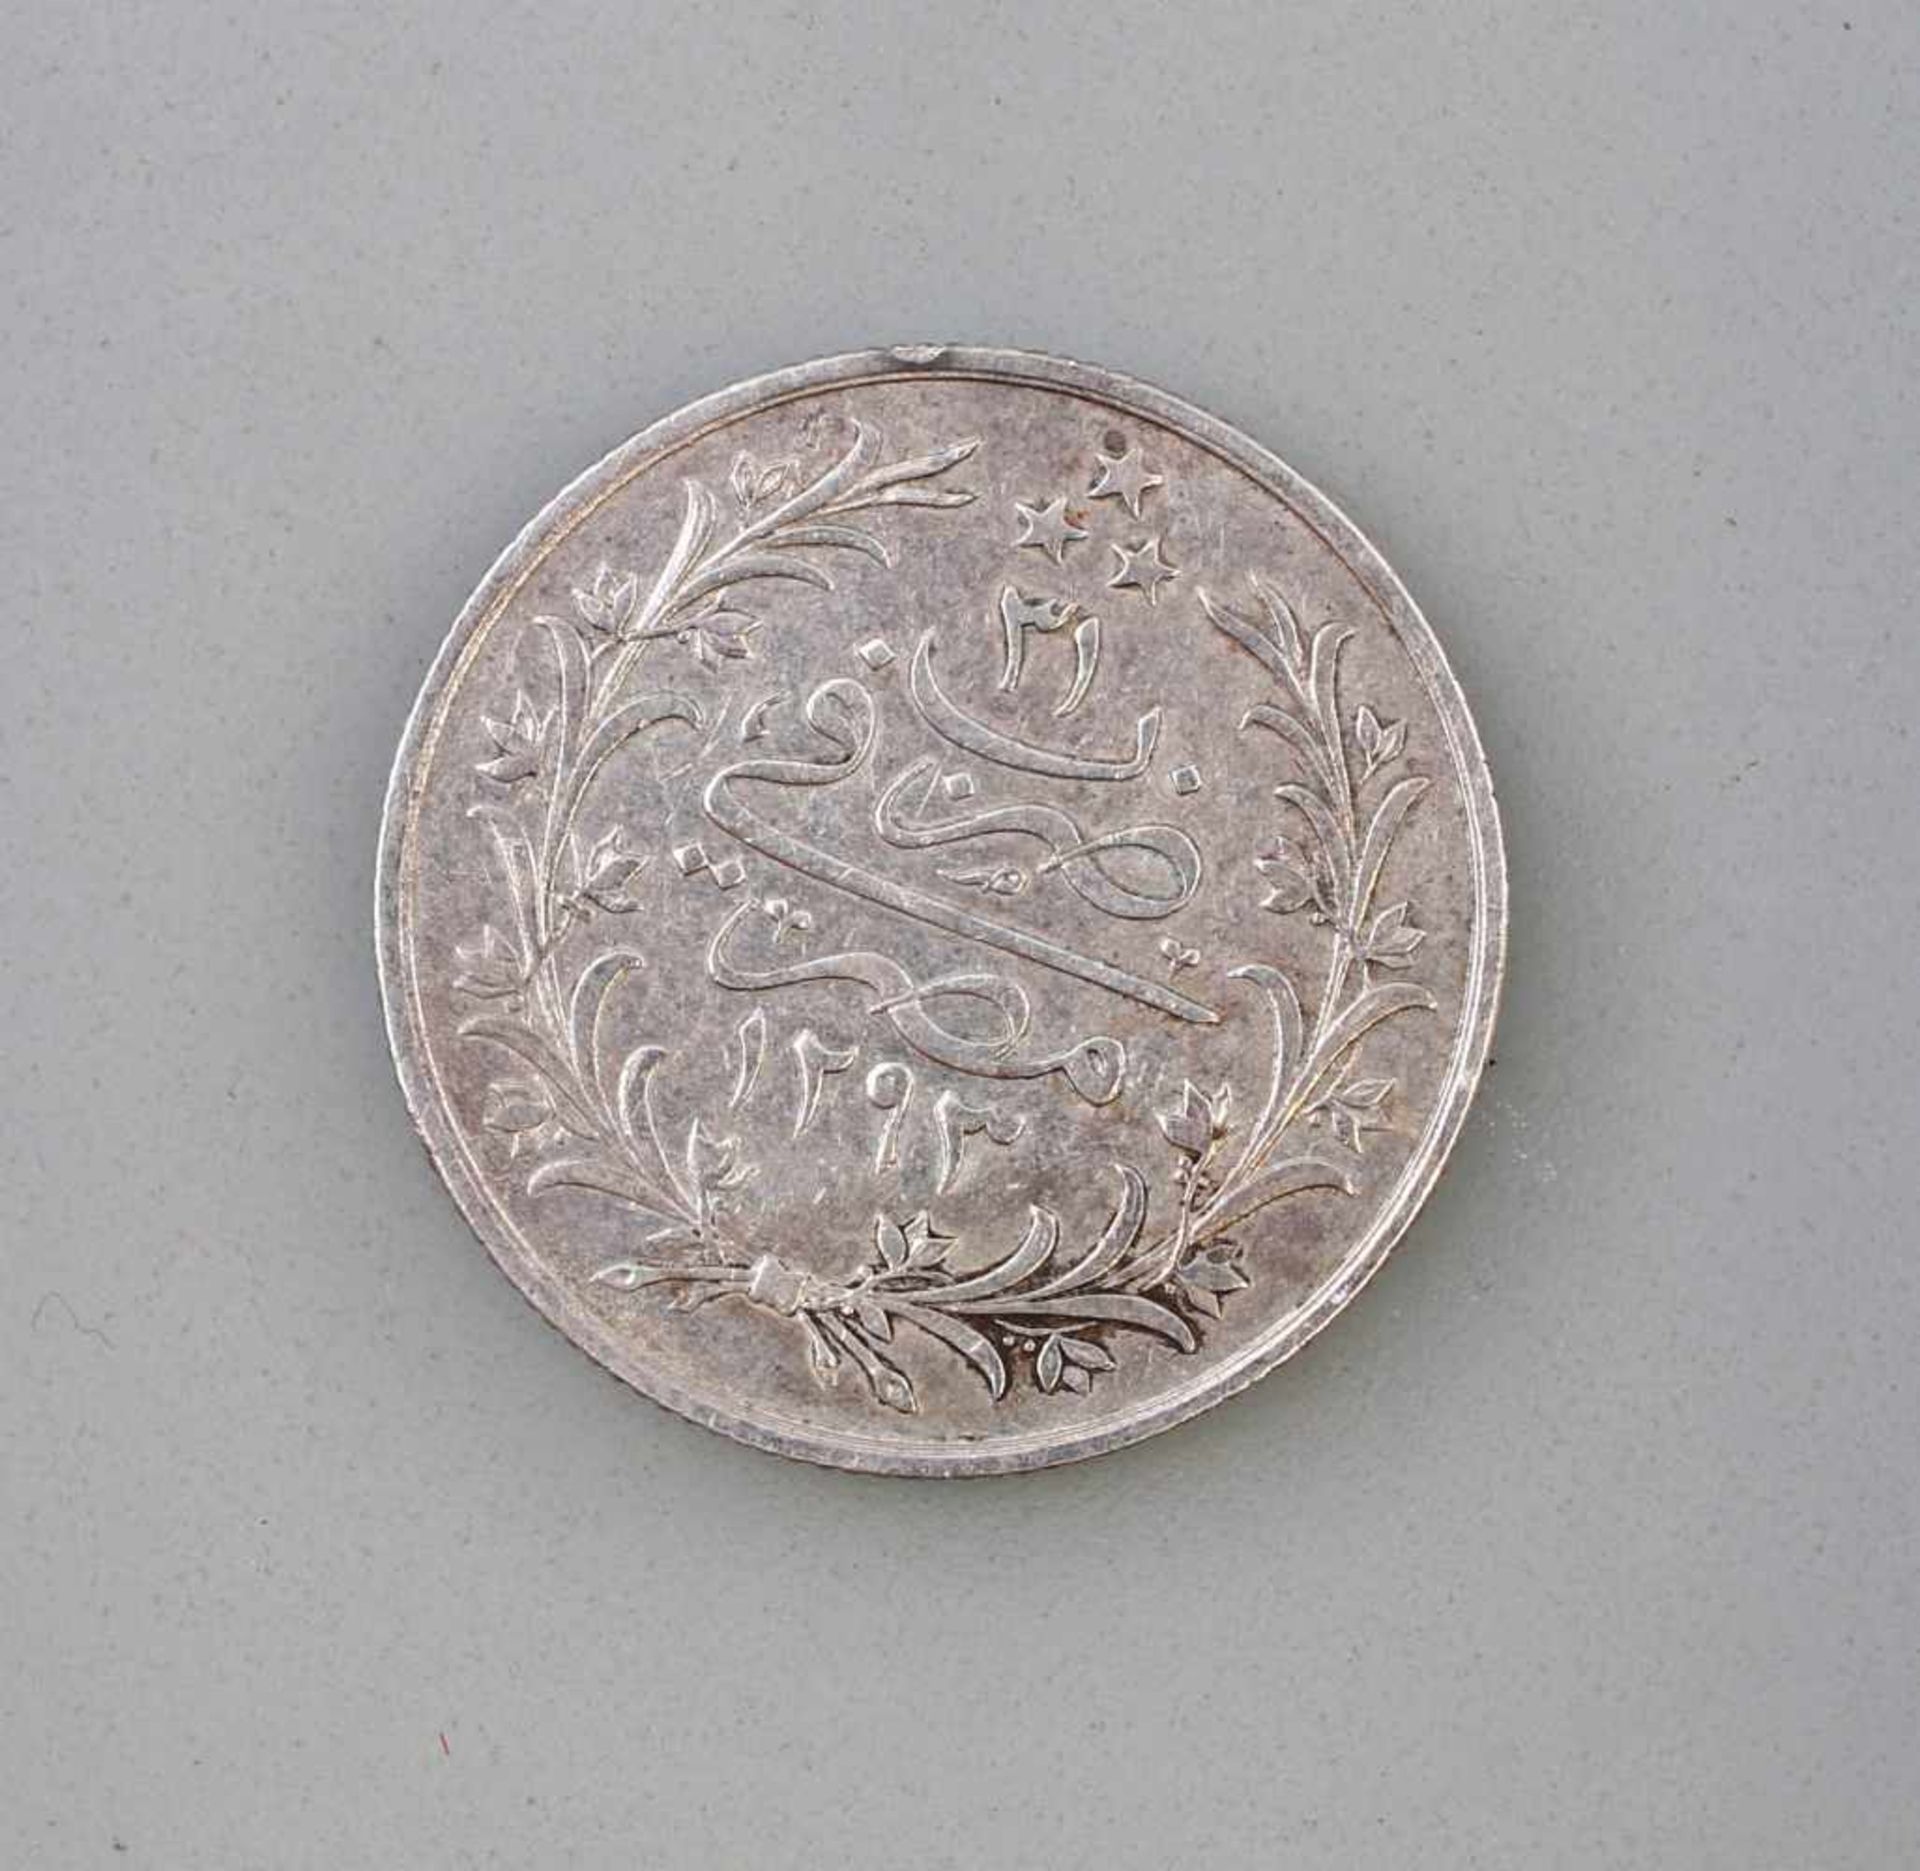 5 Qirsh Abdul Hamid II Ägypten 1884-1907833er Silber, 7g, Zustand ss-vz - Bild 2 aus 2